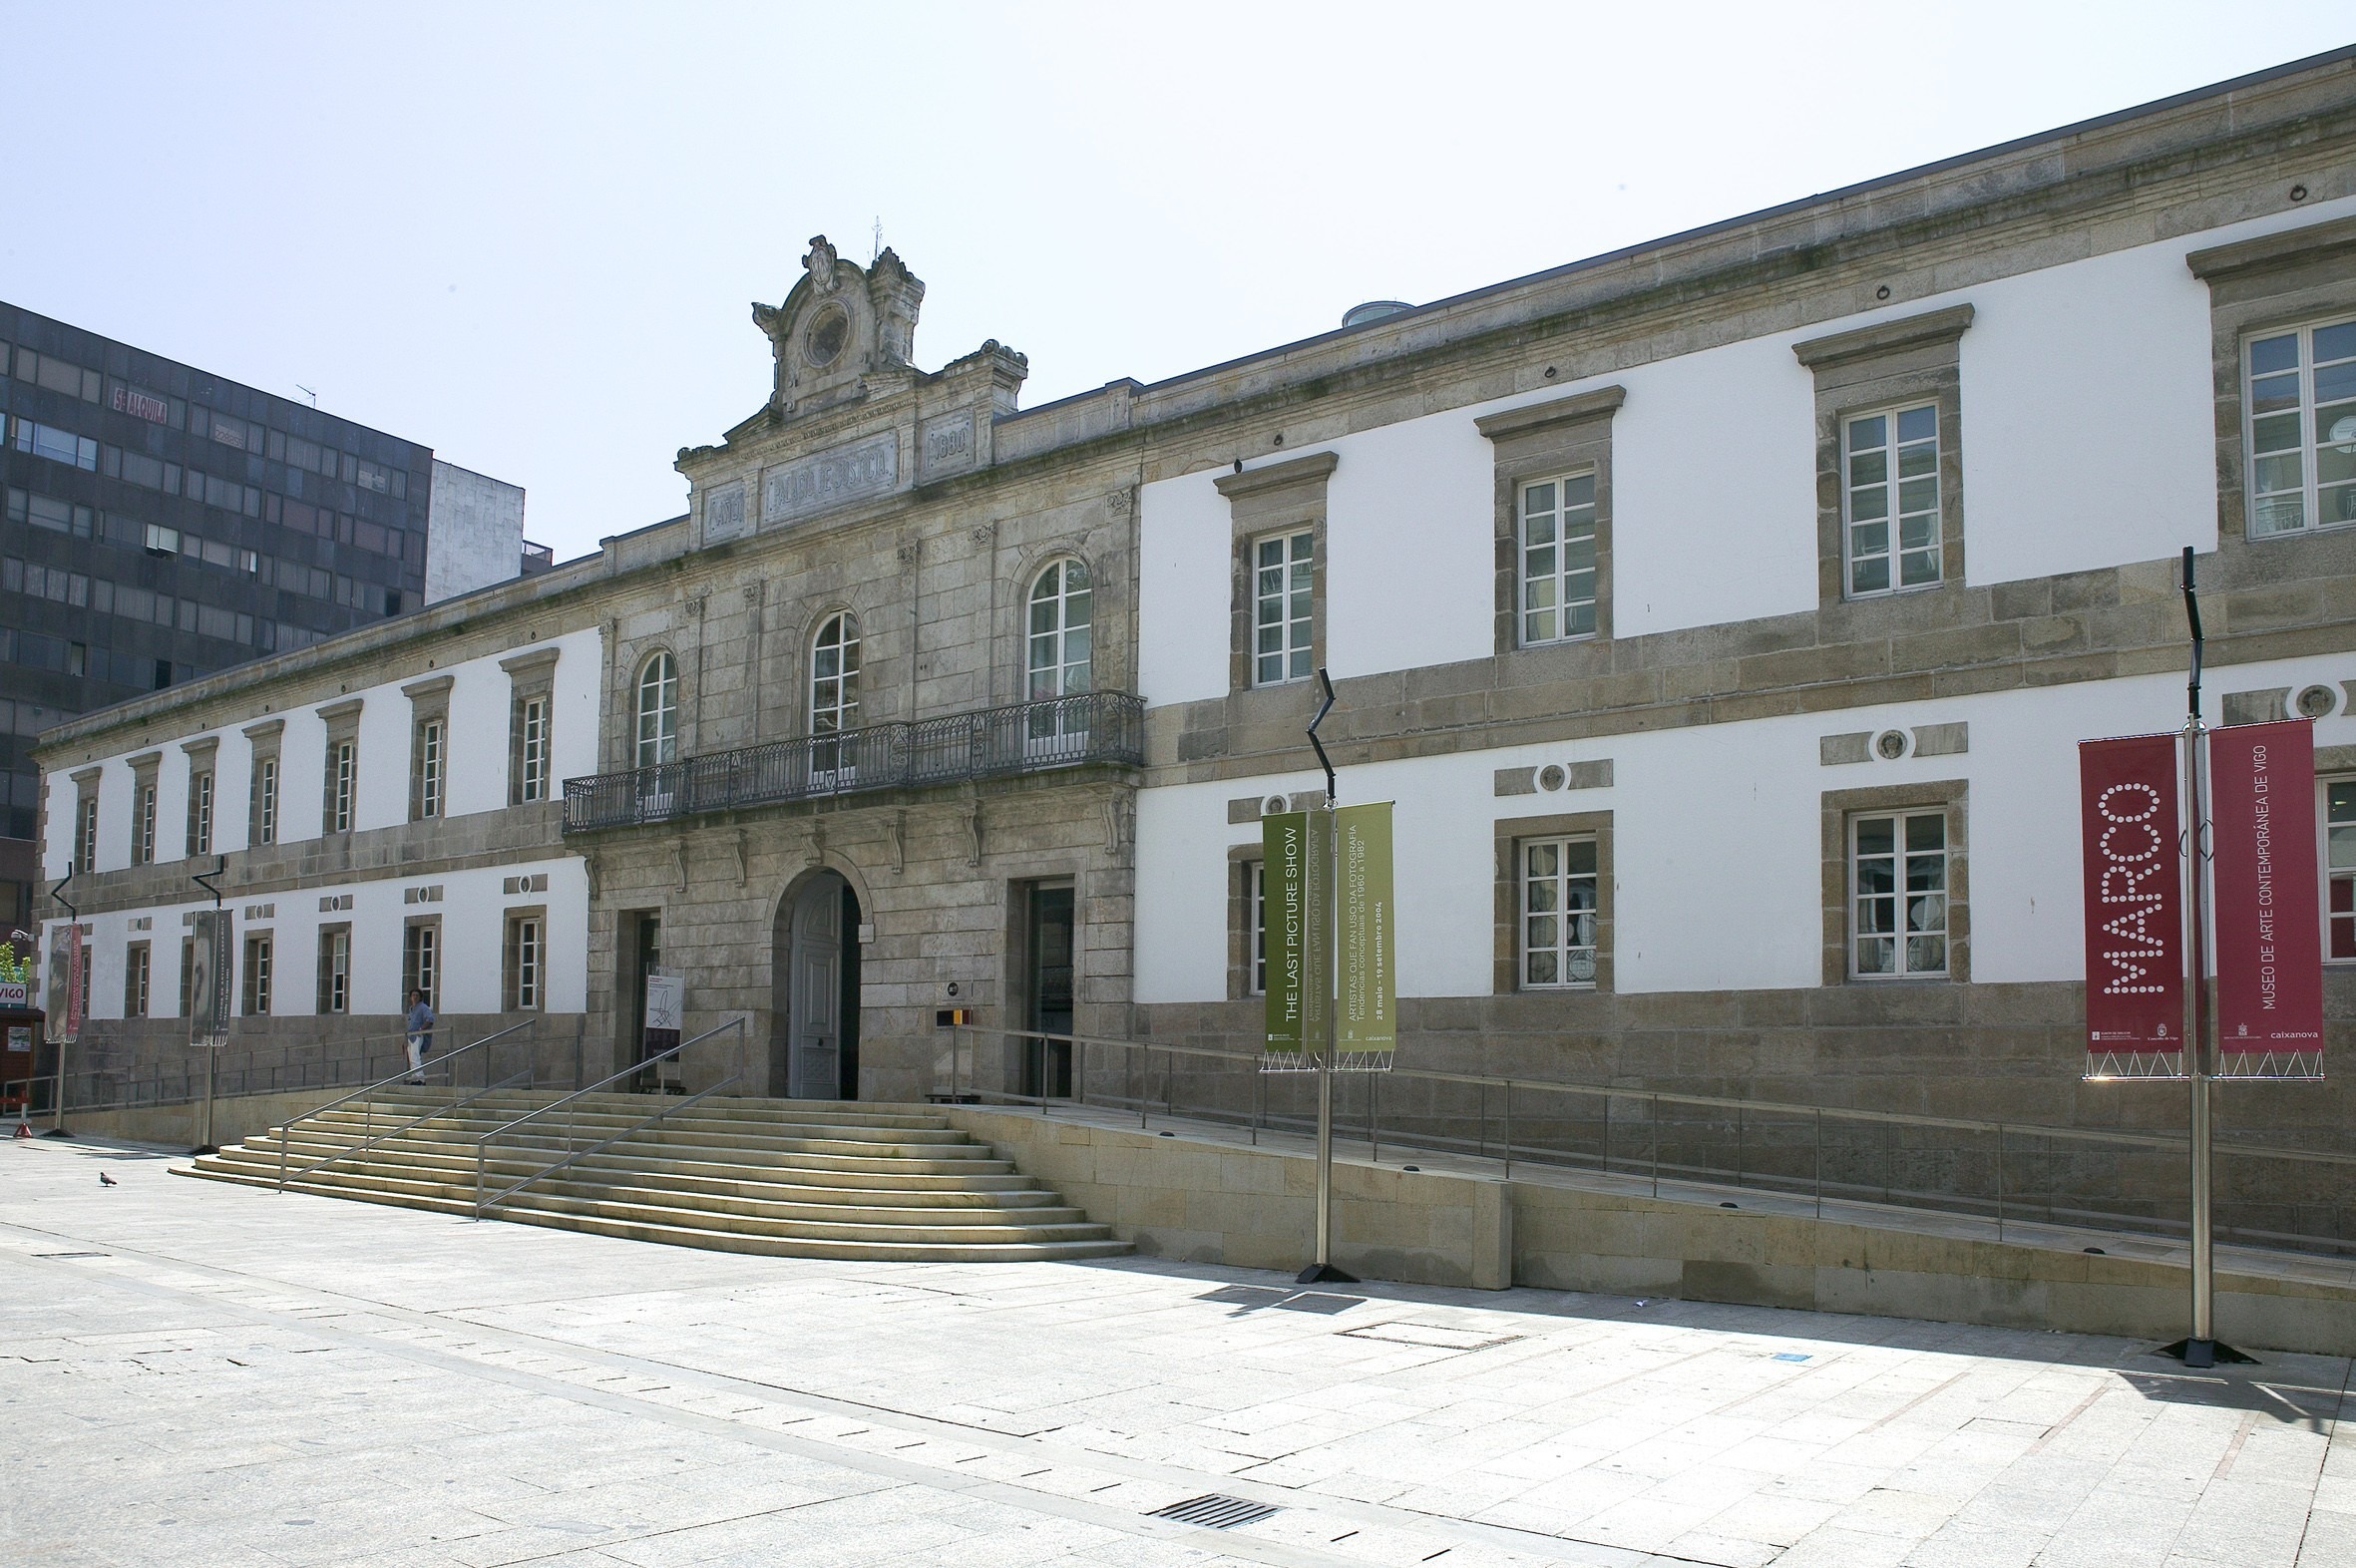 Museo de Arte Contemporánea de Vigo (MARCO)